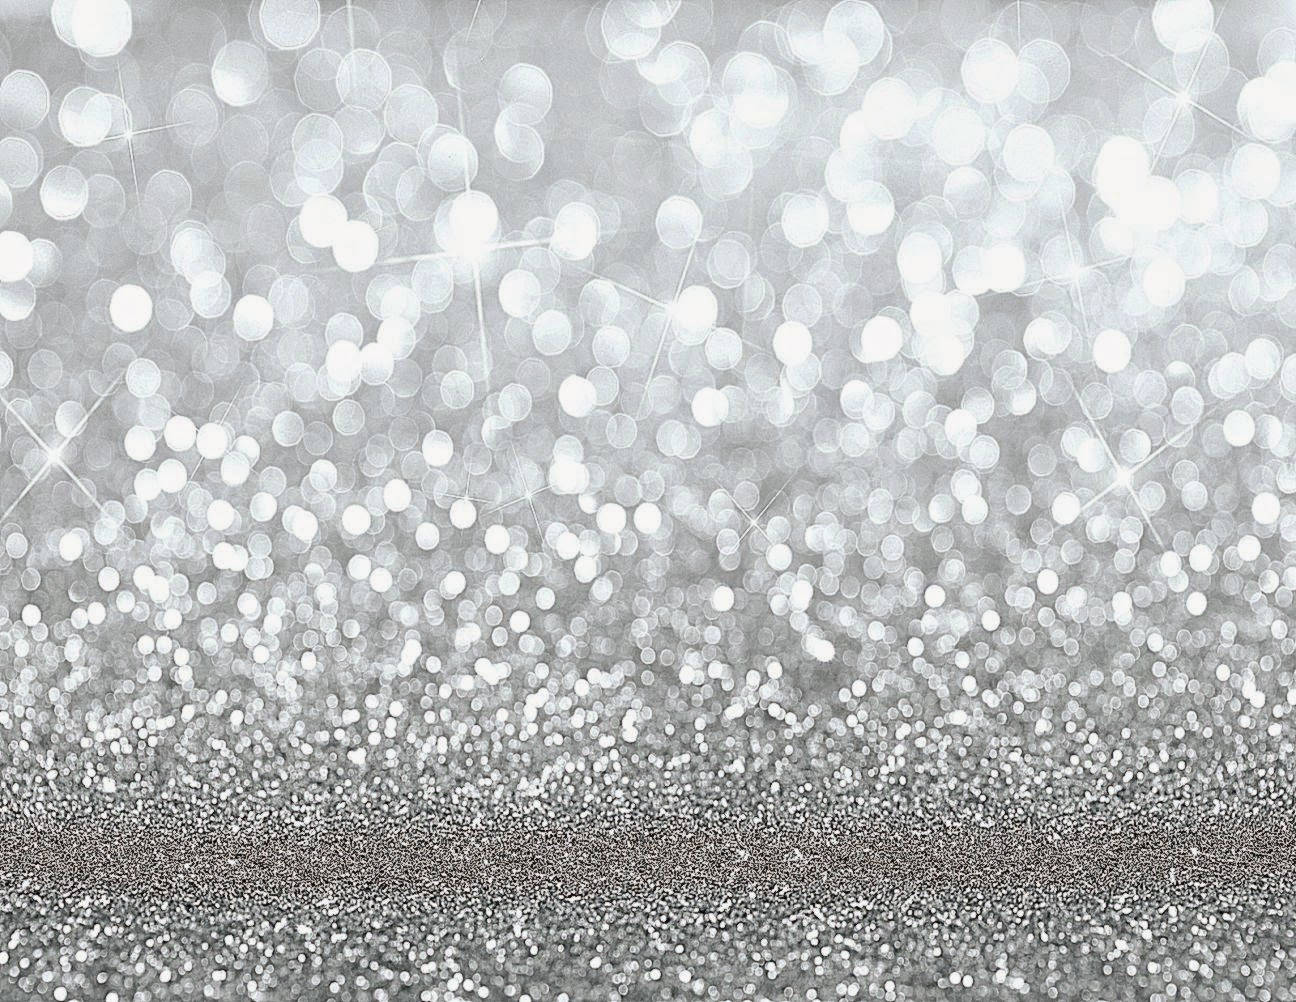 Autofokusér sølv glitter-indtryk. Wallpaper